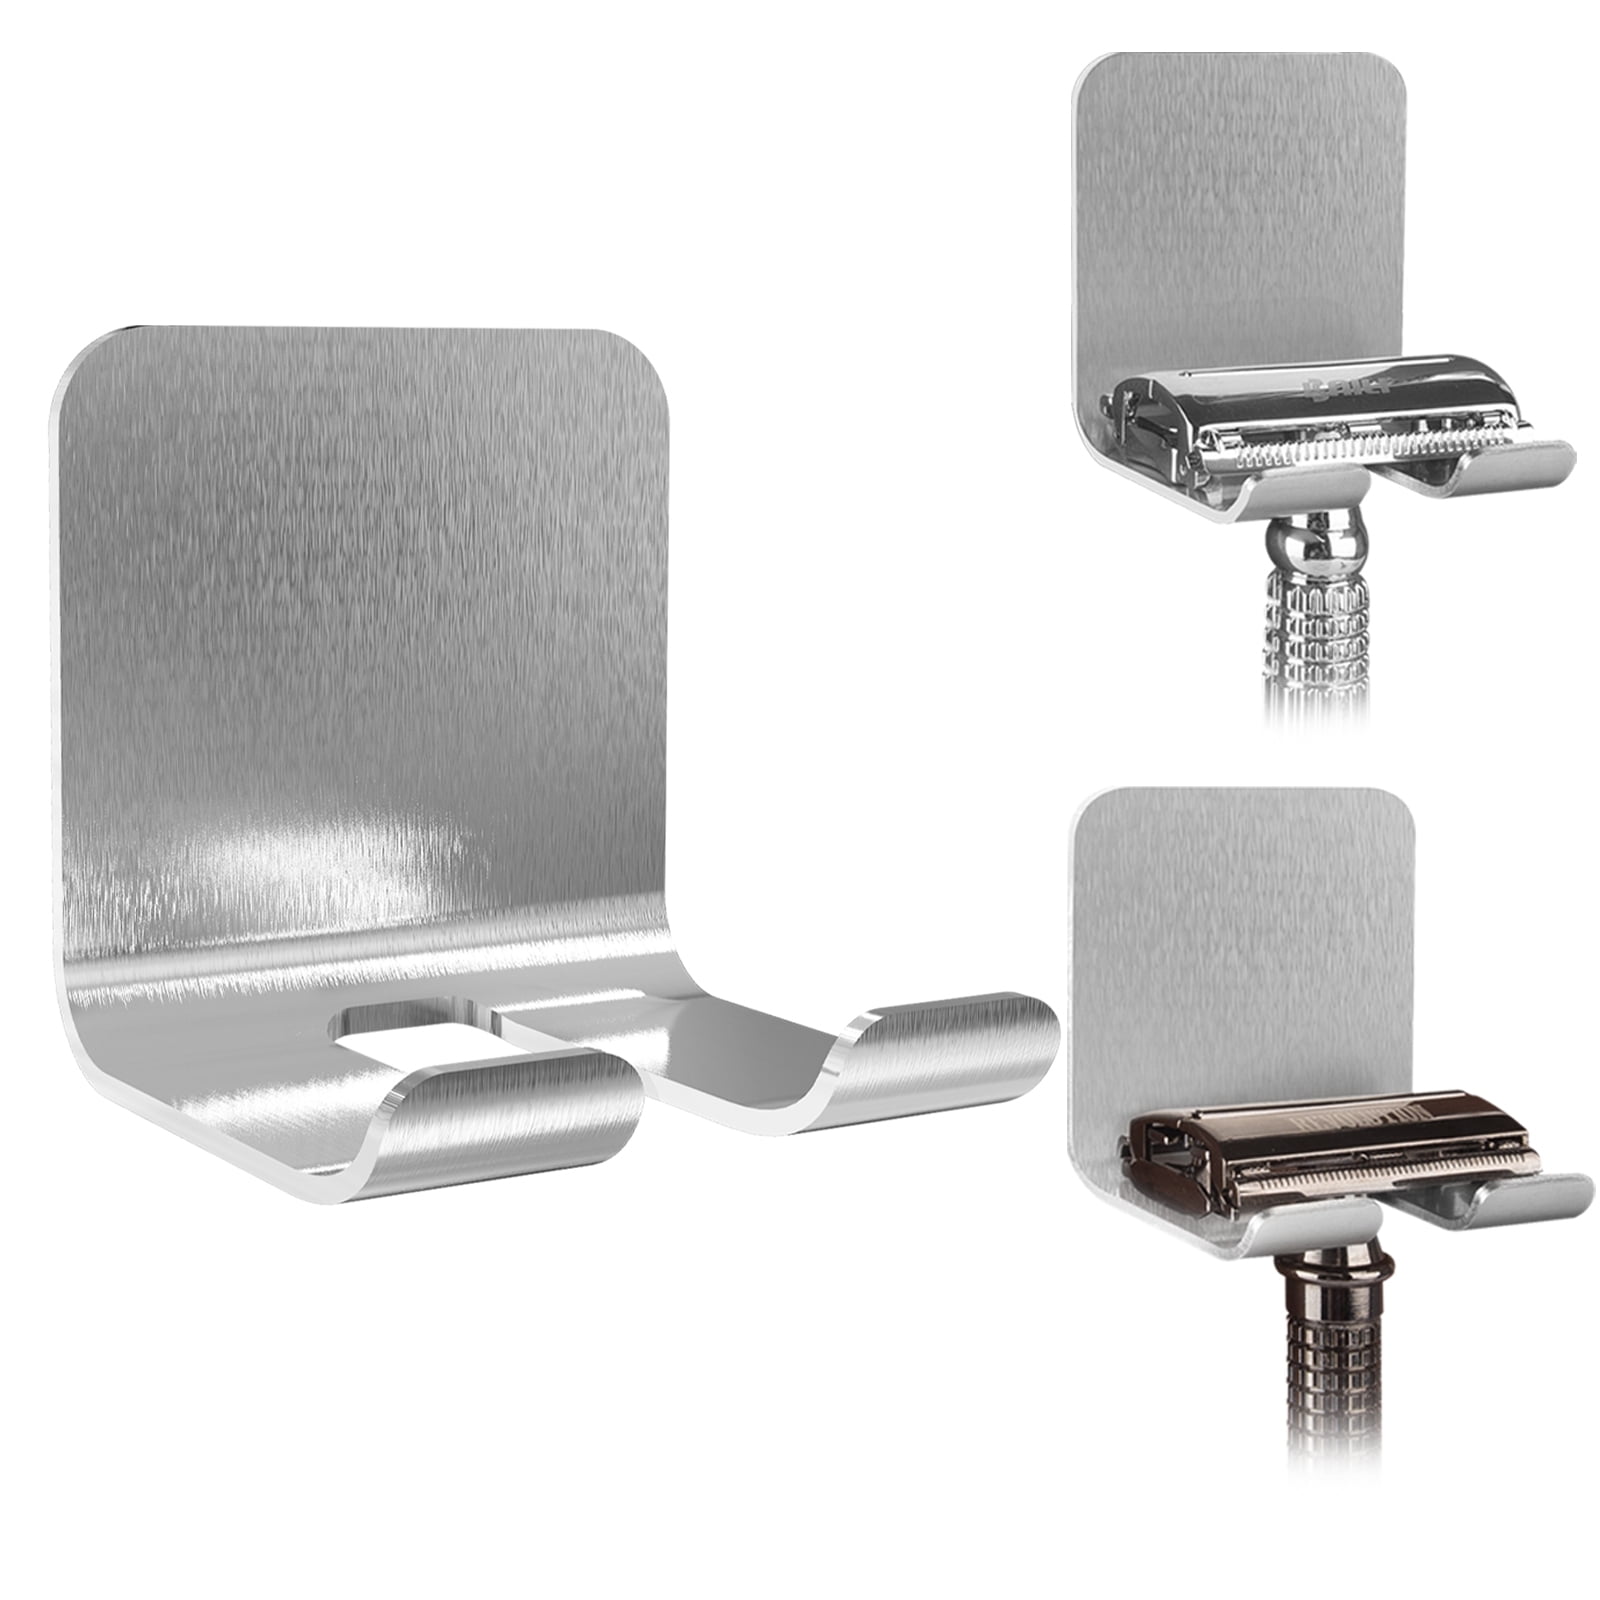 ABINLIN Razor Holder for Shower Wall 4 Pack, Stainless Steel Razor Hanger  for Shower, Waterproof Self-Adhesive Towel Hooks for Bathrooms (Silver)